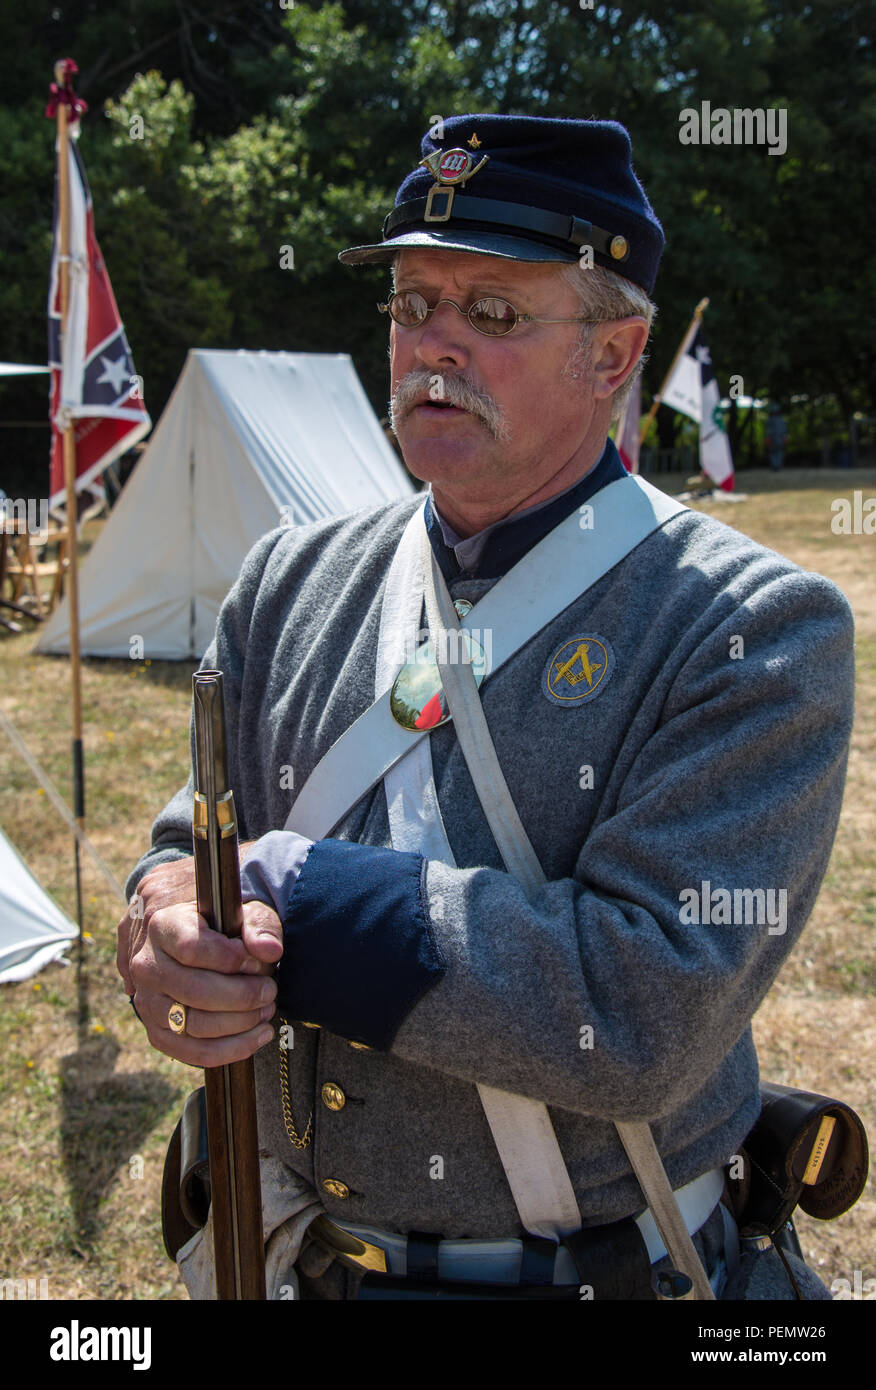 Duncan Mills, Calif / July 14, 2012: Man in Military Uniform during Civil War Reenactment Stock Photo